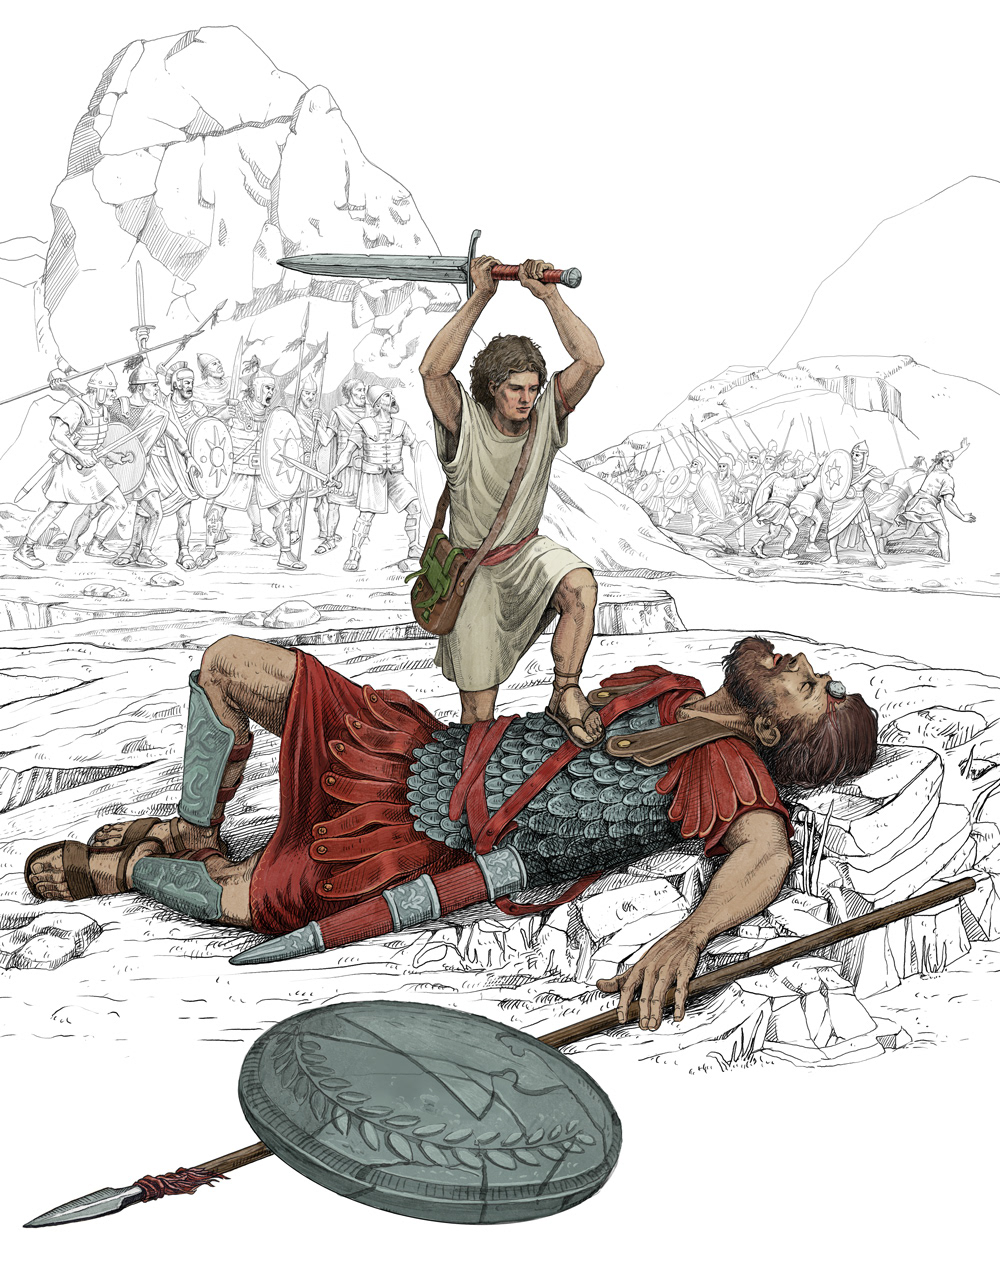 ILLUSTRATION  book illustration bible story warrior digital illustration 2d Illustration Drawing  Digital Art  artwork